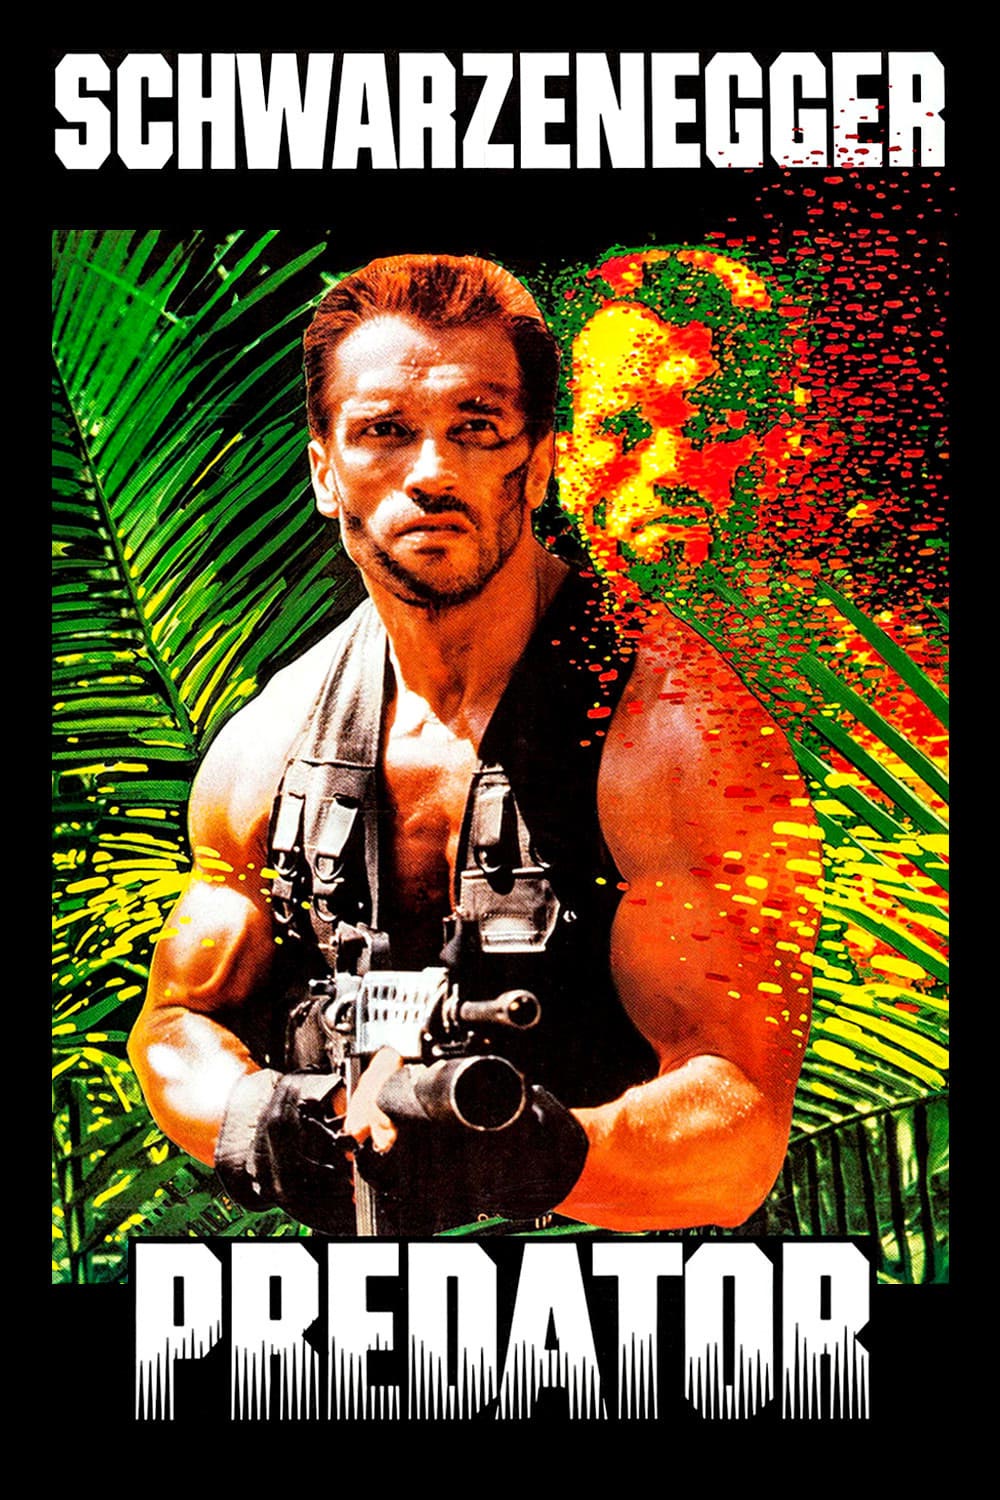 Predator (1987) poster